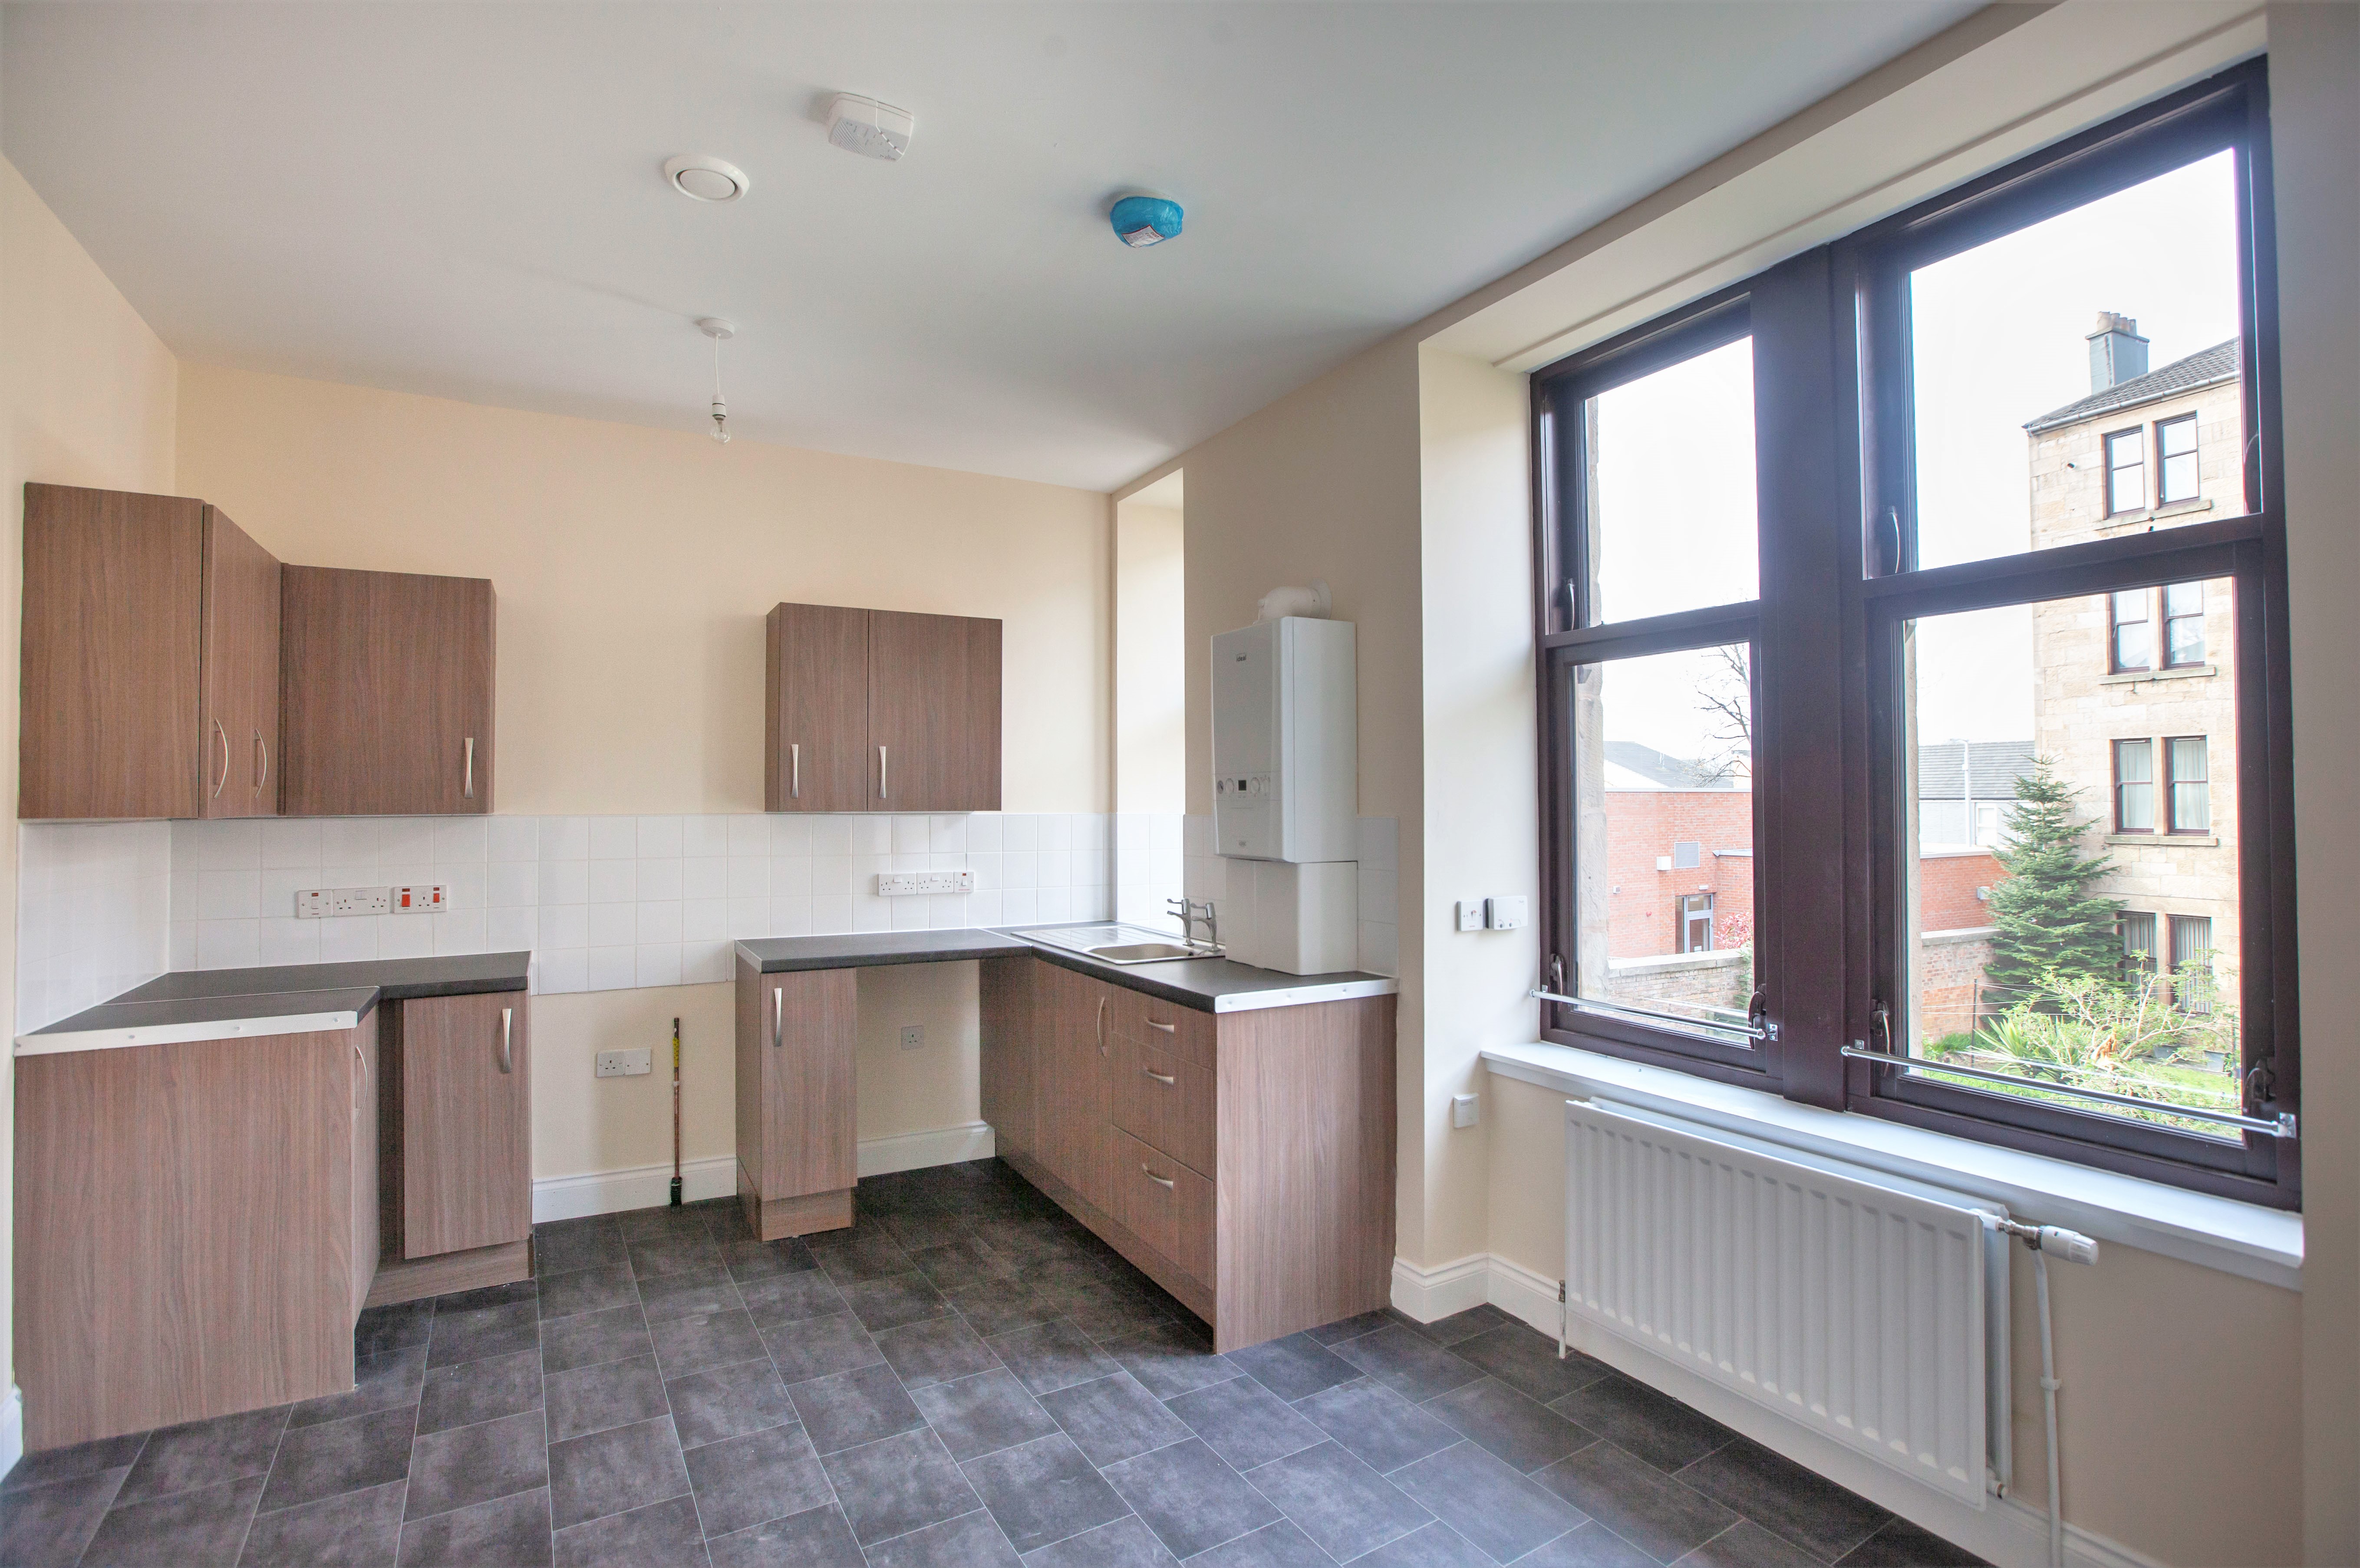 Linthouse completes Govan housing improvements